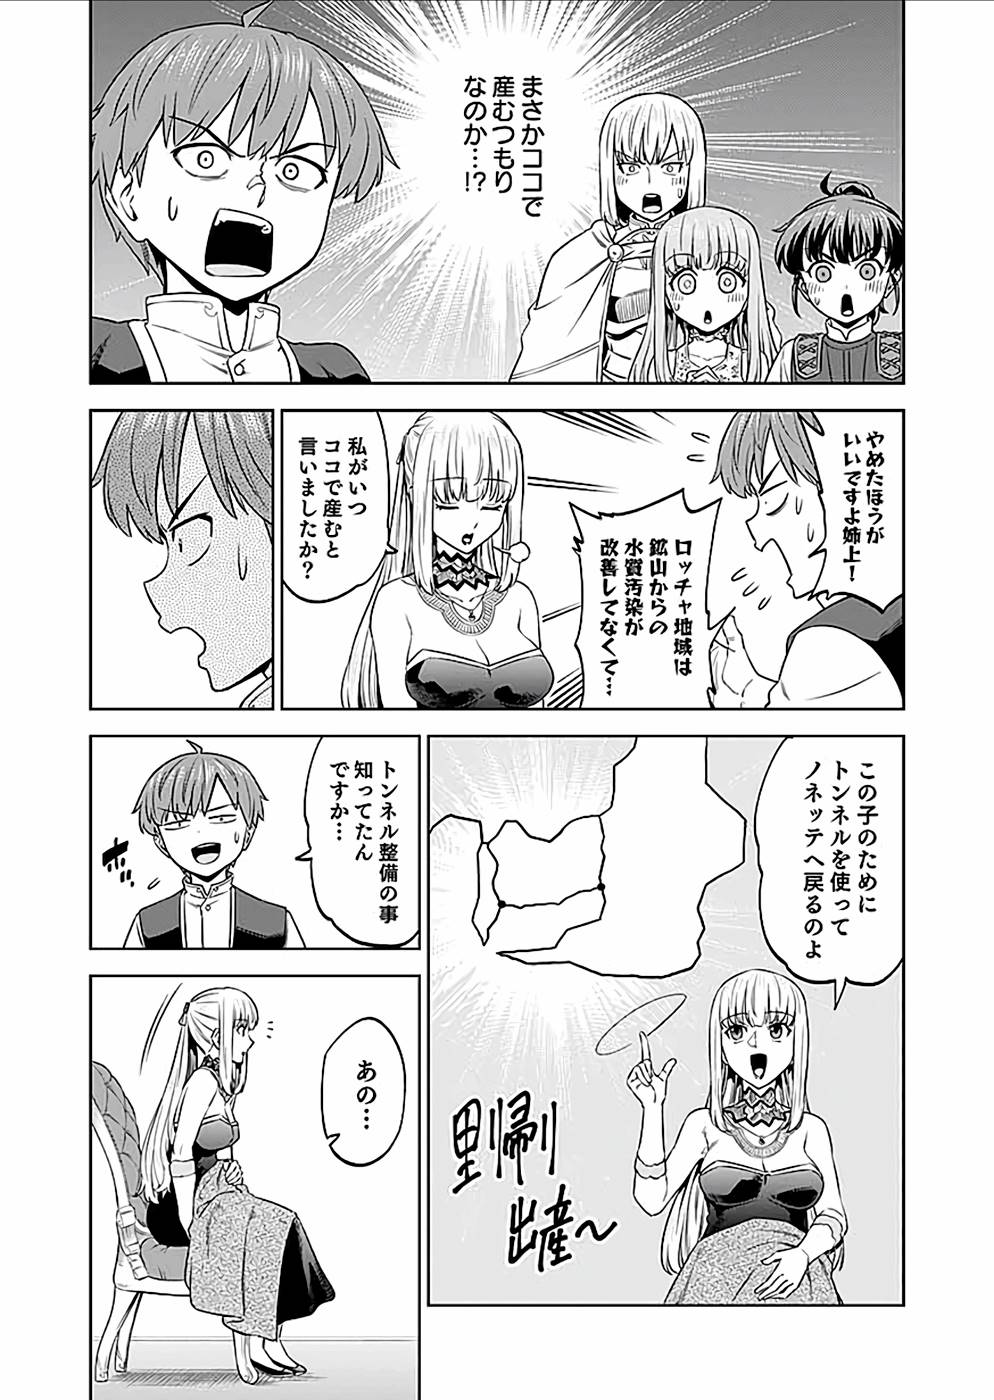 Millimos Saga: Battei Ouji no Tensei Senki - Chapter 22 - Page 2